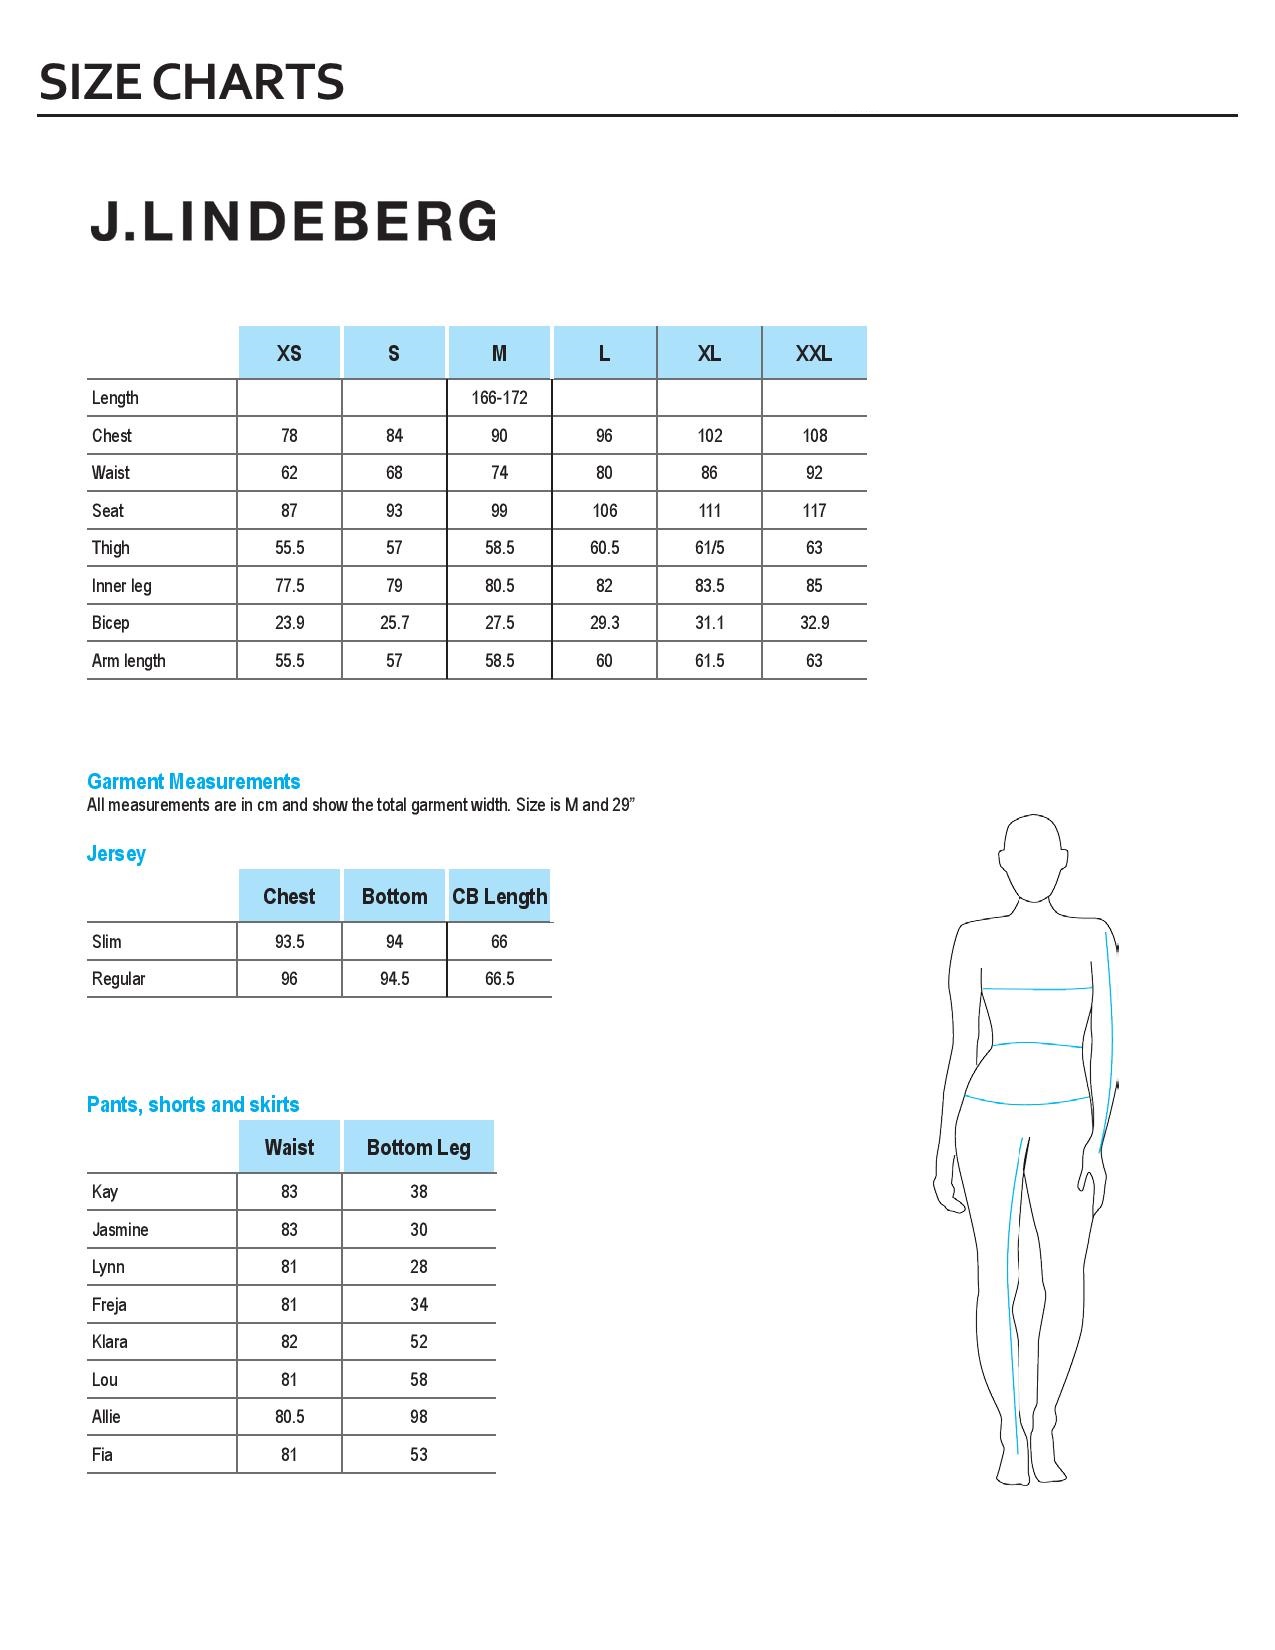 J Lindeberg Shirt Size Chart